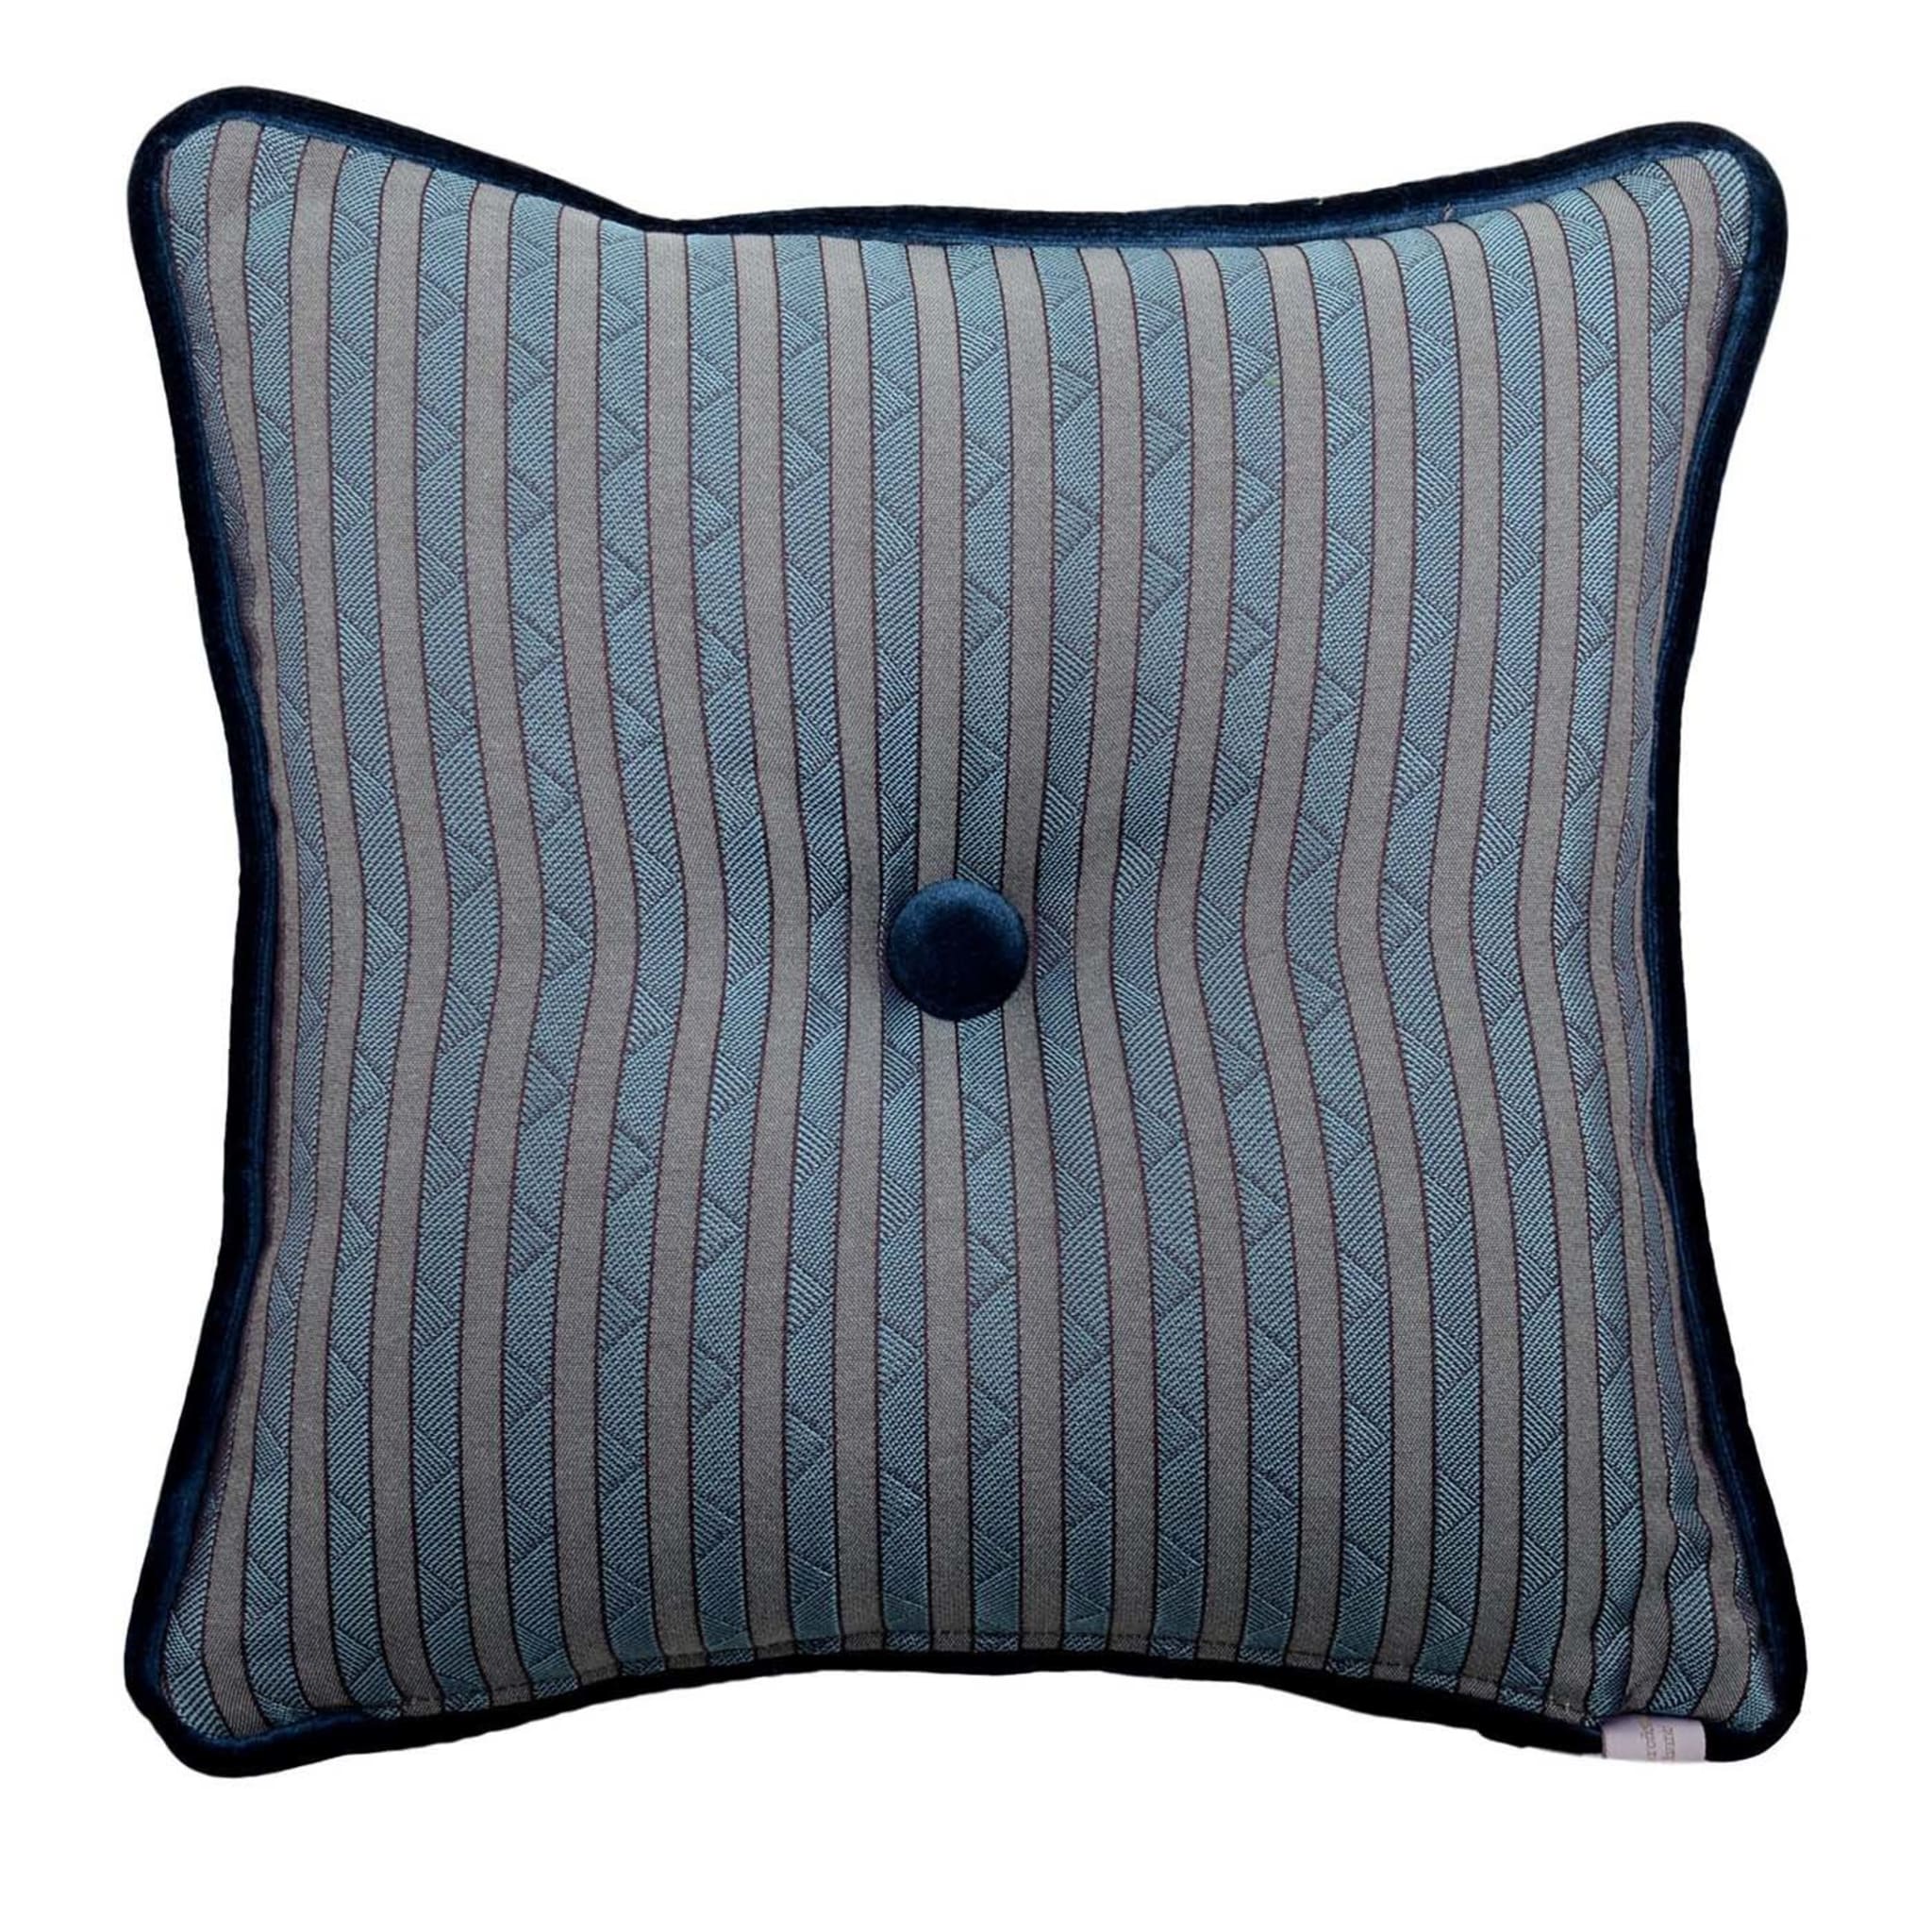 Blue-Grey Carré Cushion in striped jacquard fabric - Main view